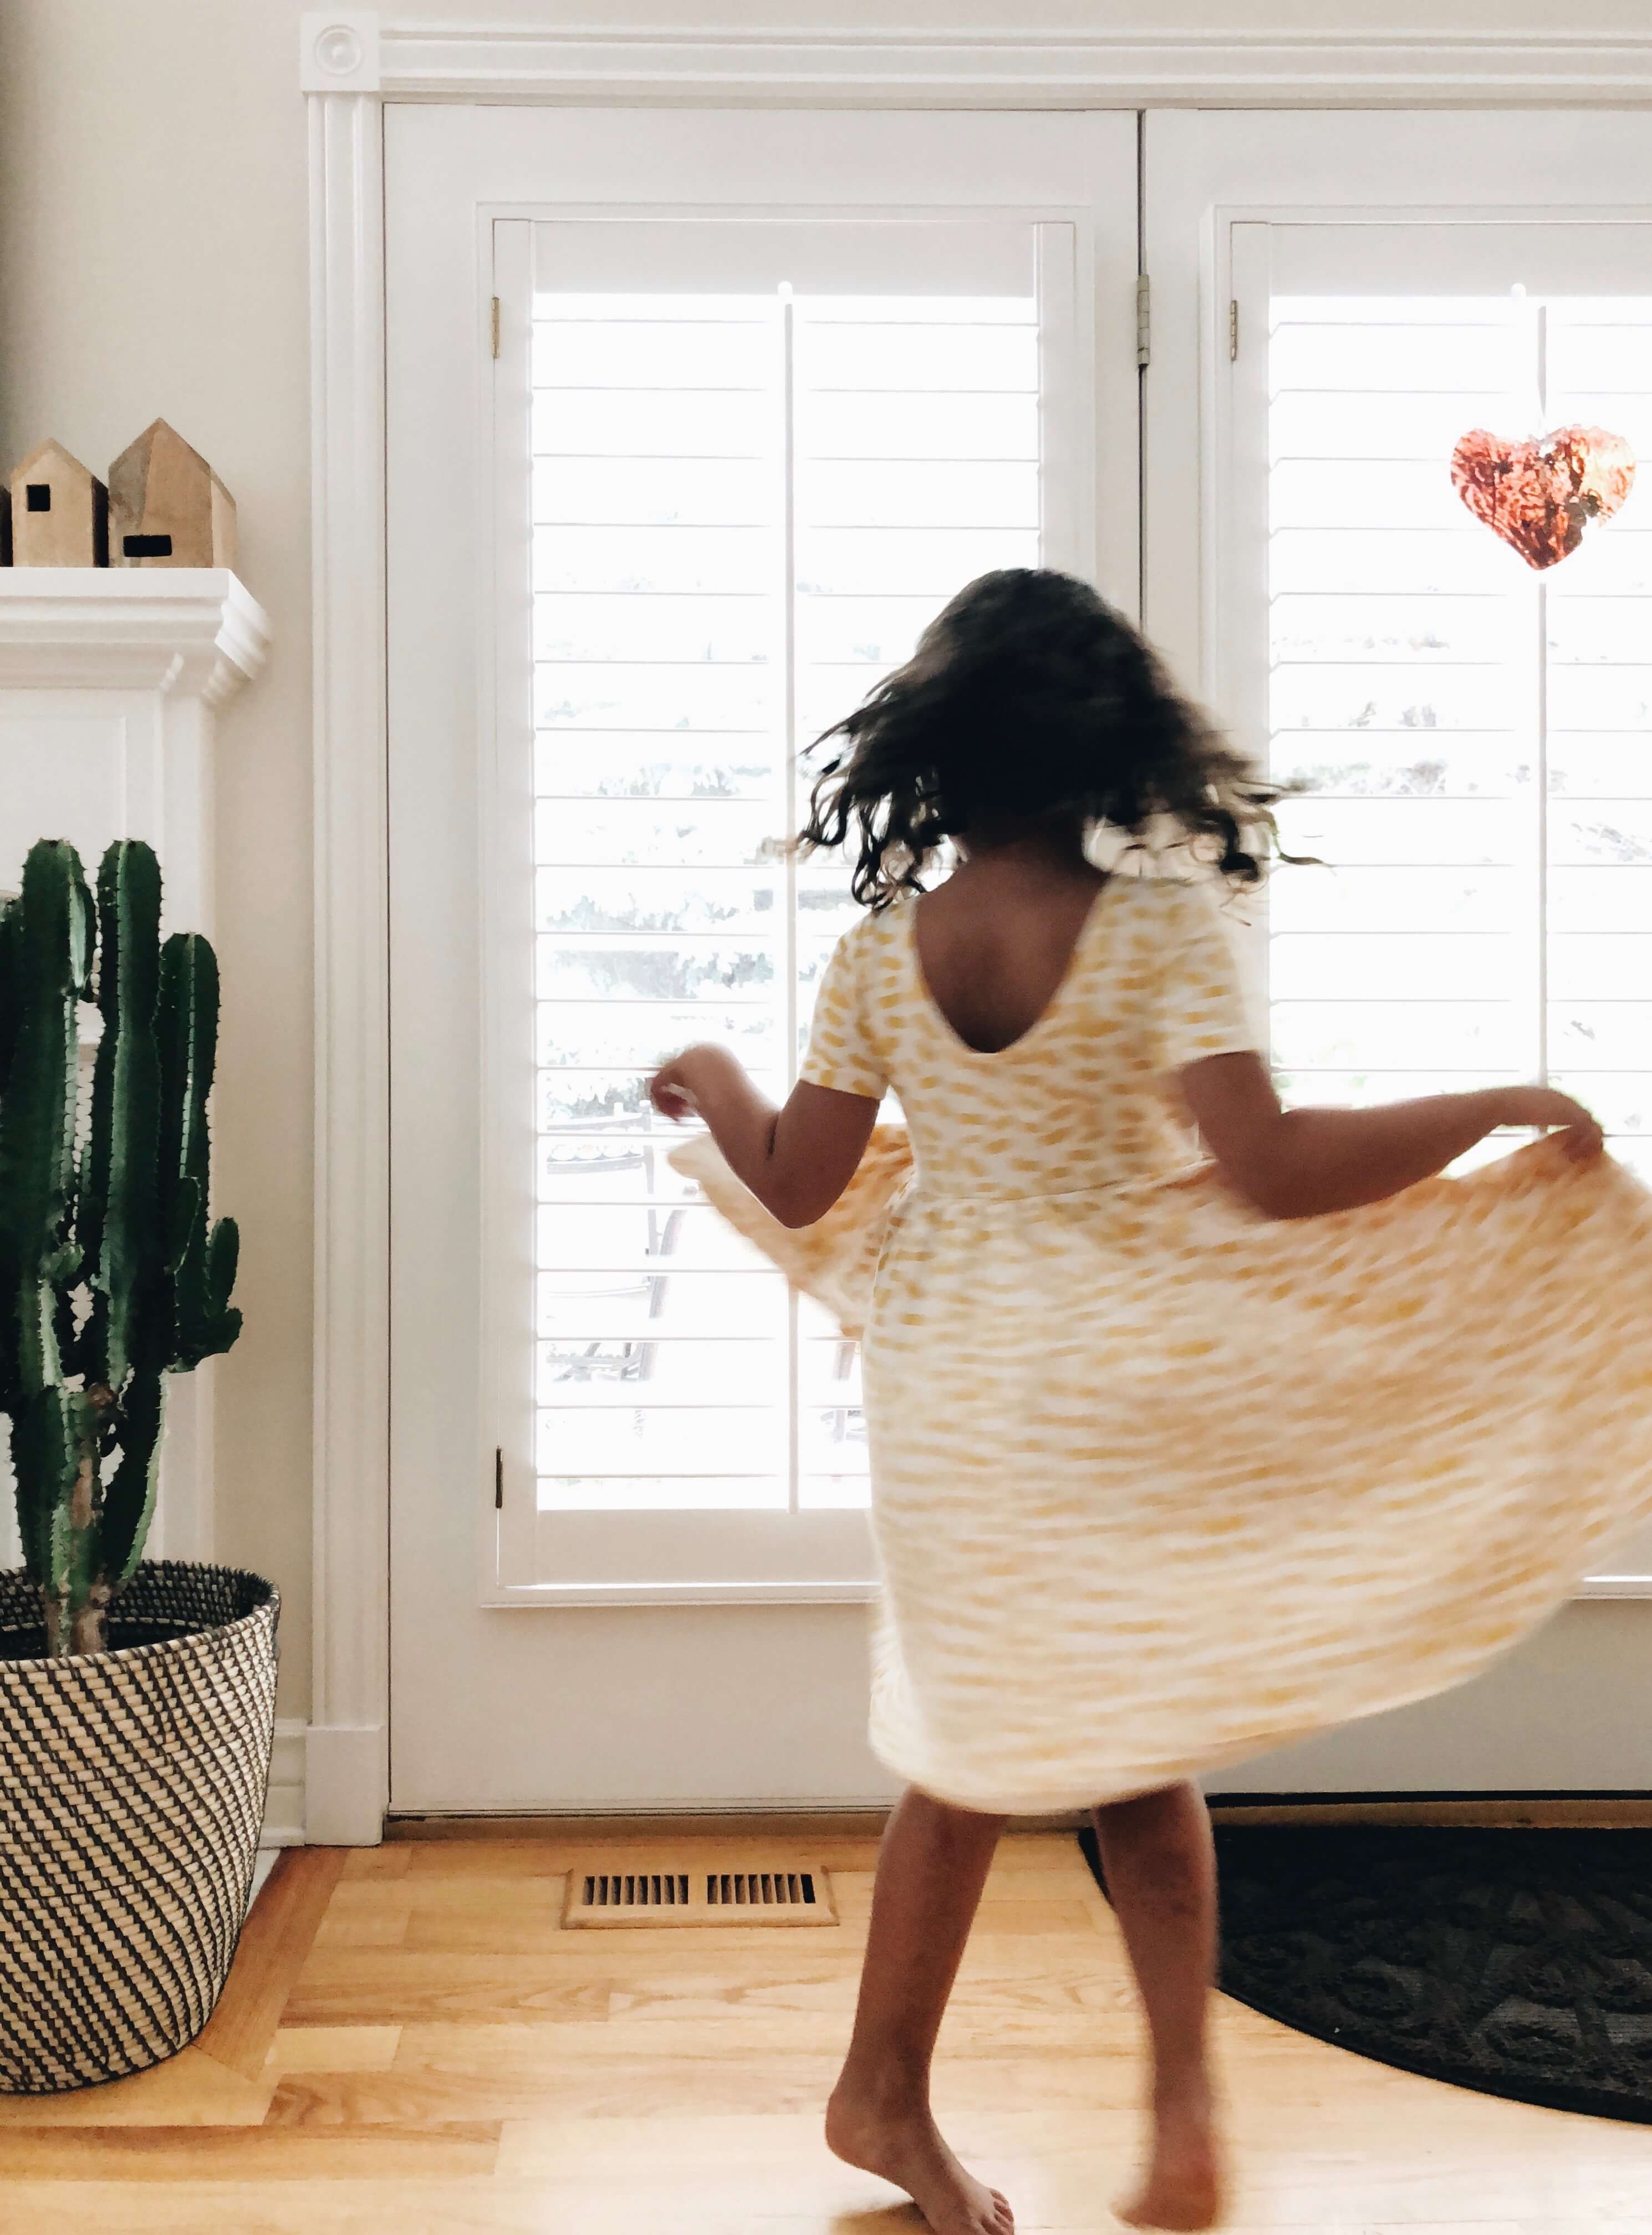 Blurry photo of little girl in polka-dot dress twirling whimsically